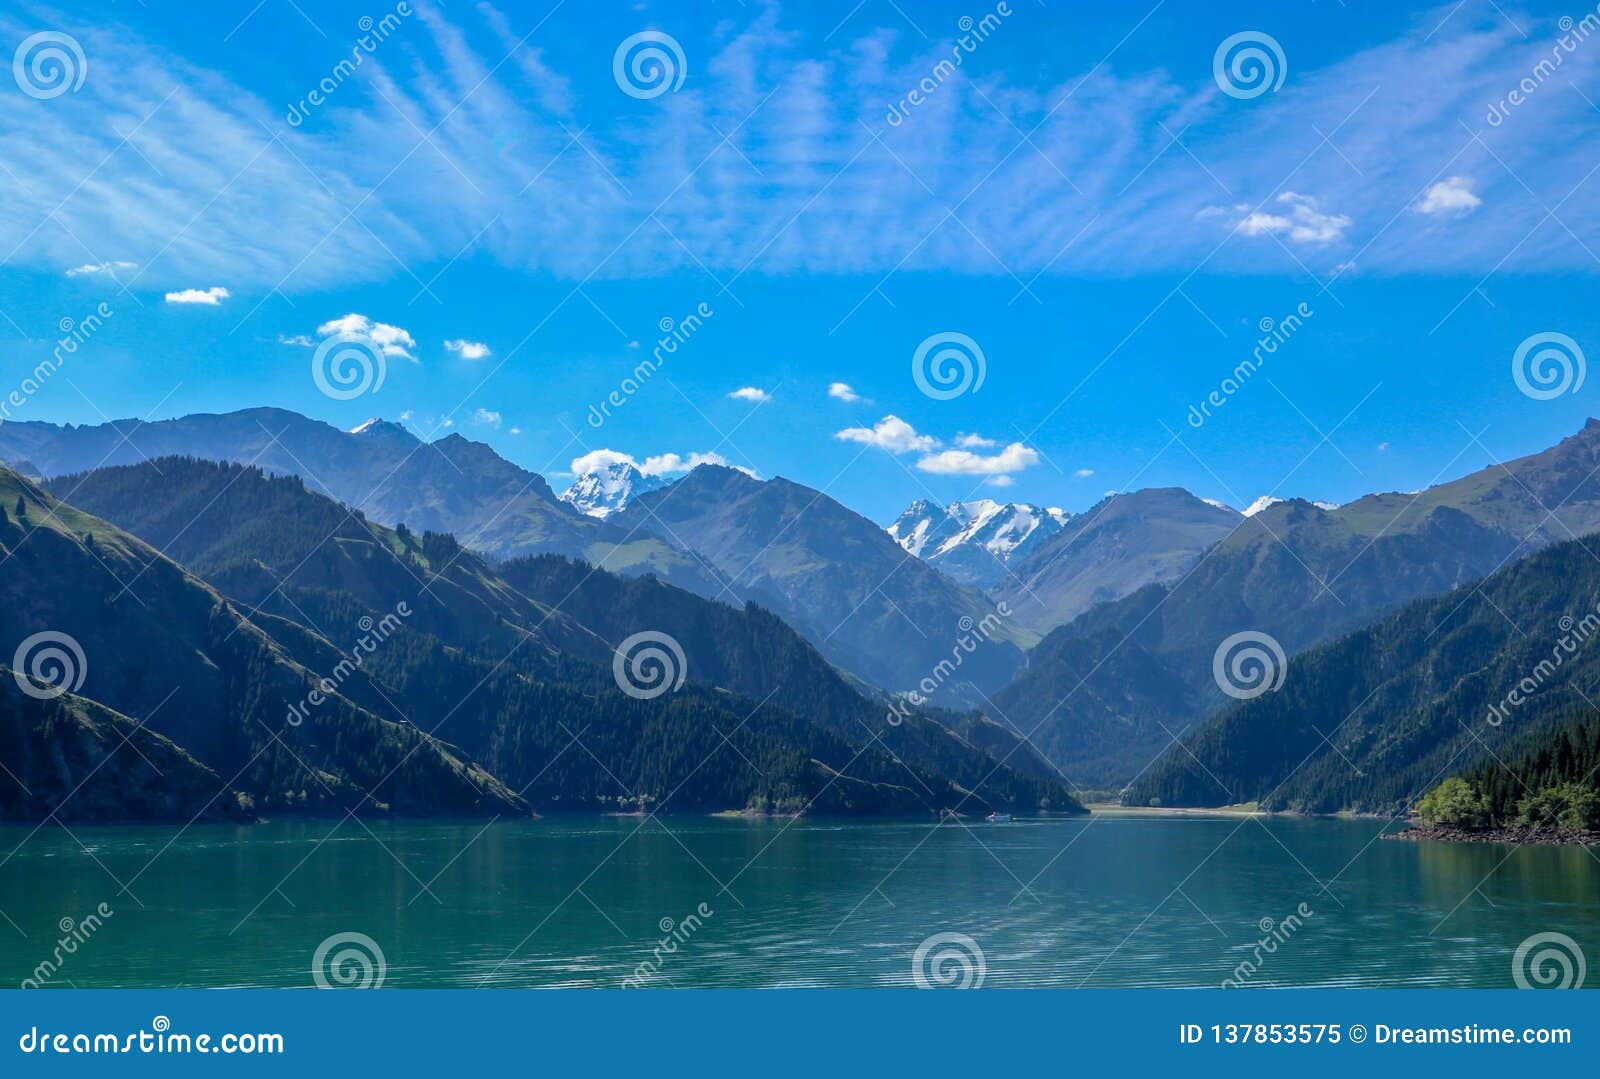 heavenly mountains and heavenly lake of xinjiang, china